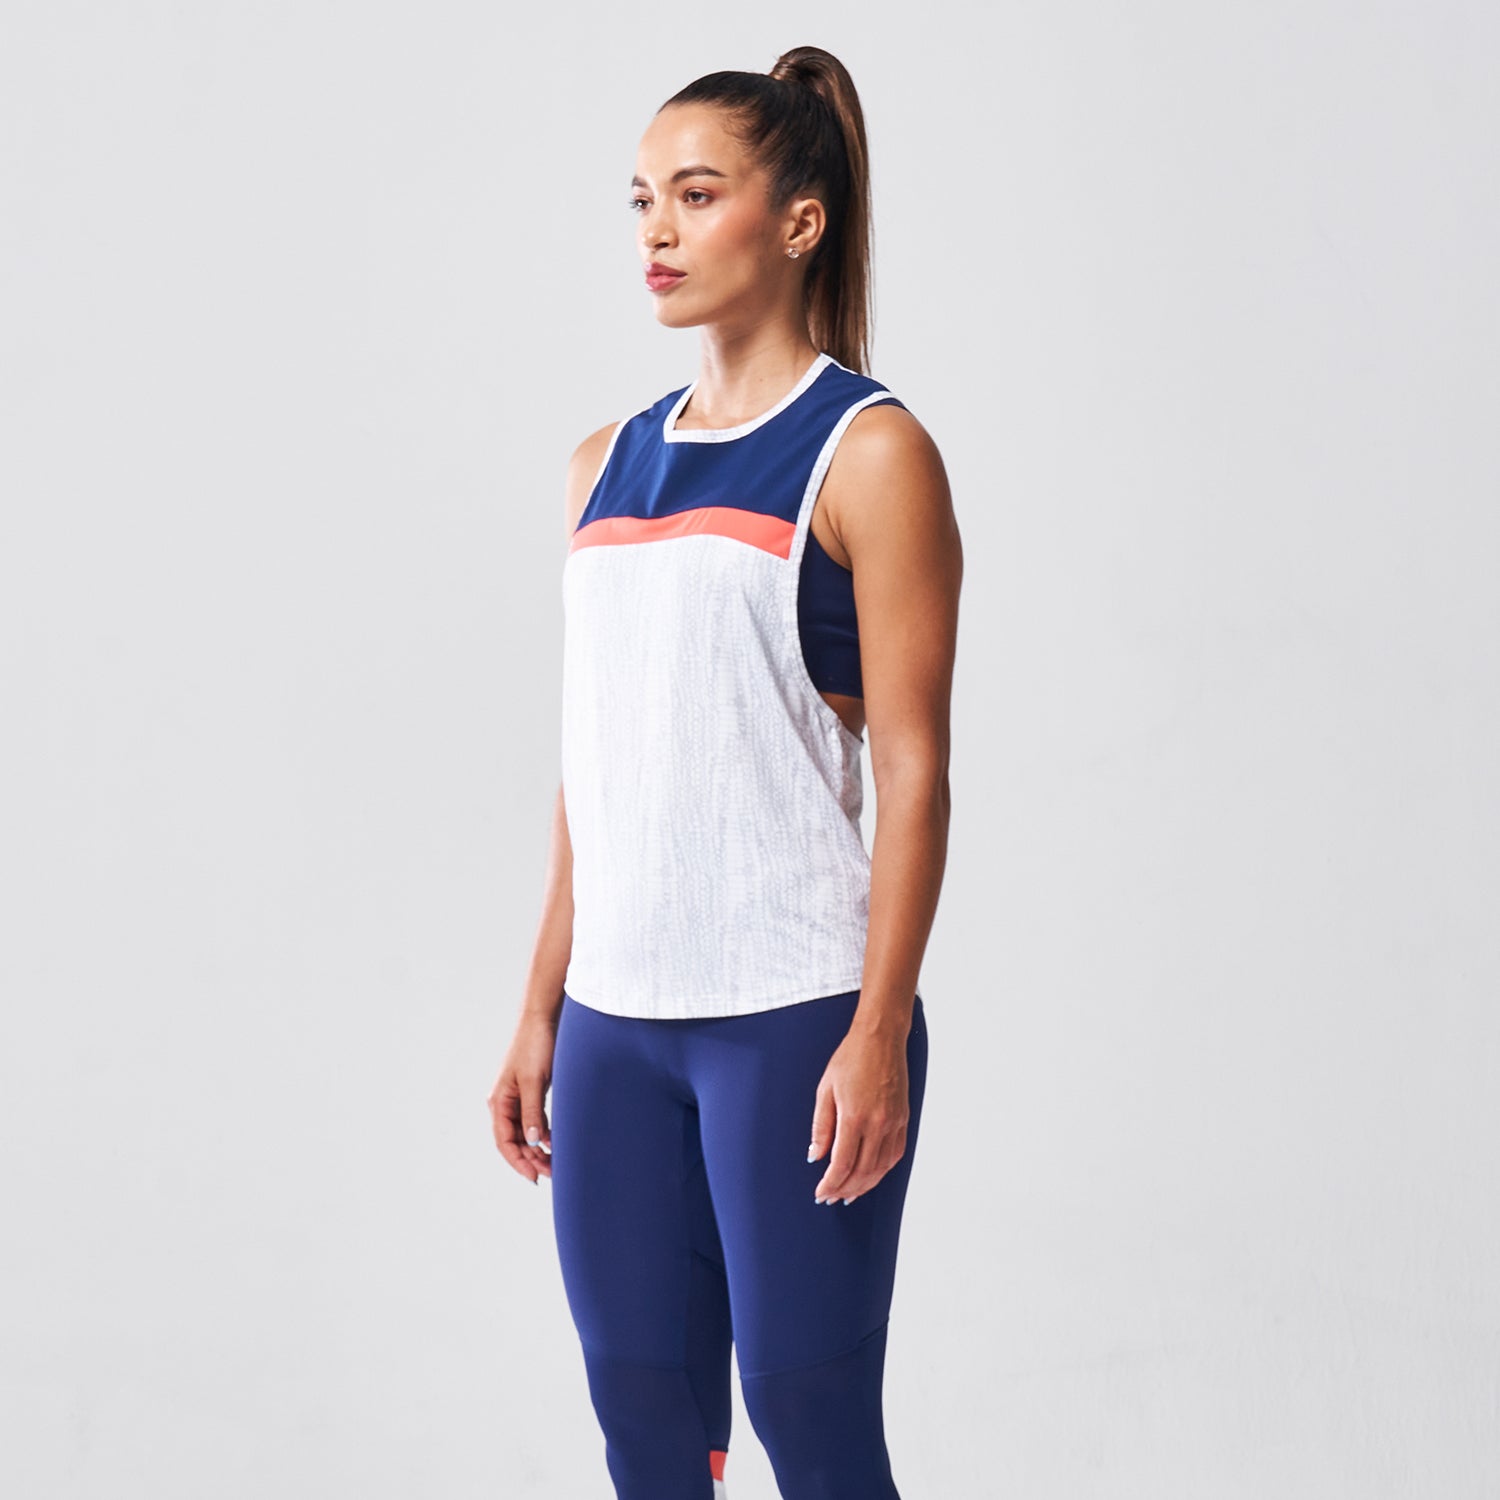 squatwolf-workout-clothes-lab360-impact-tank-white-snakeskin-gym-tank-tops-for-women